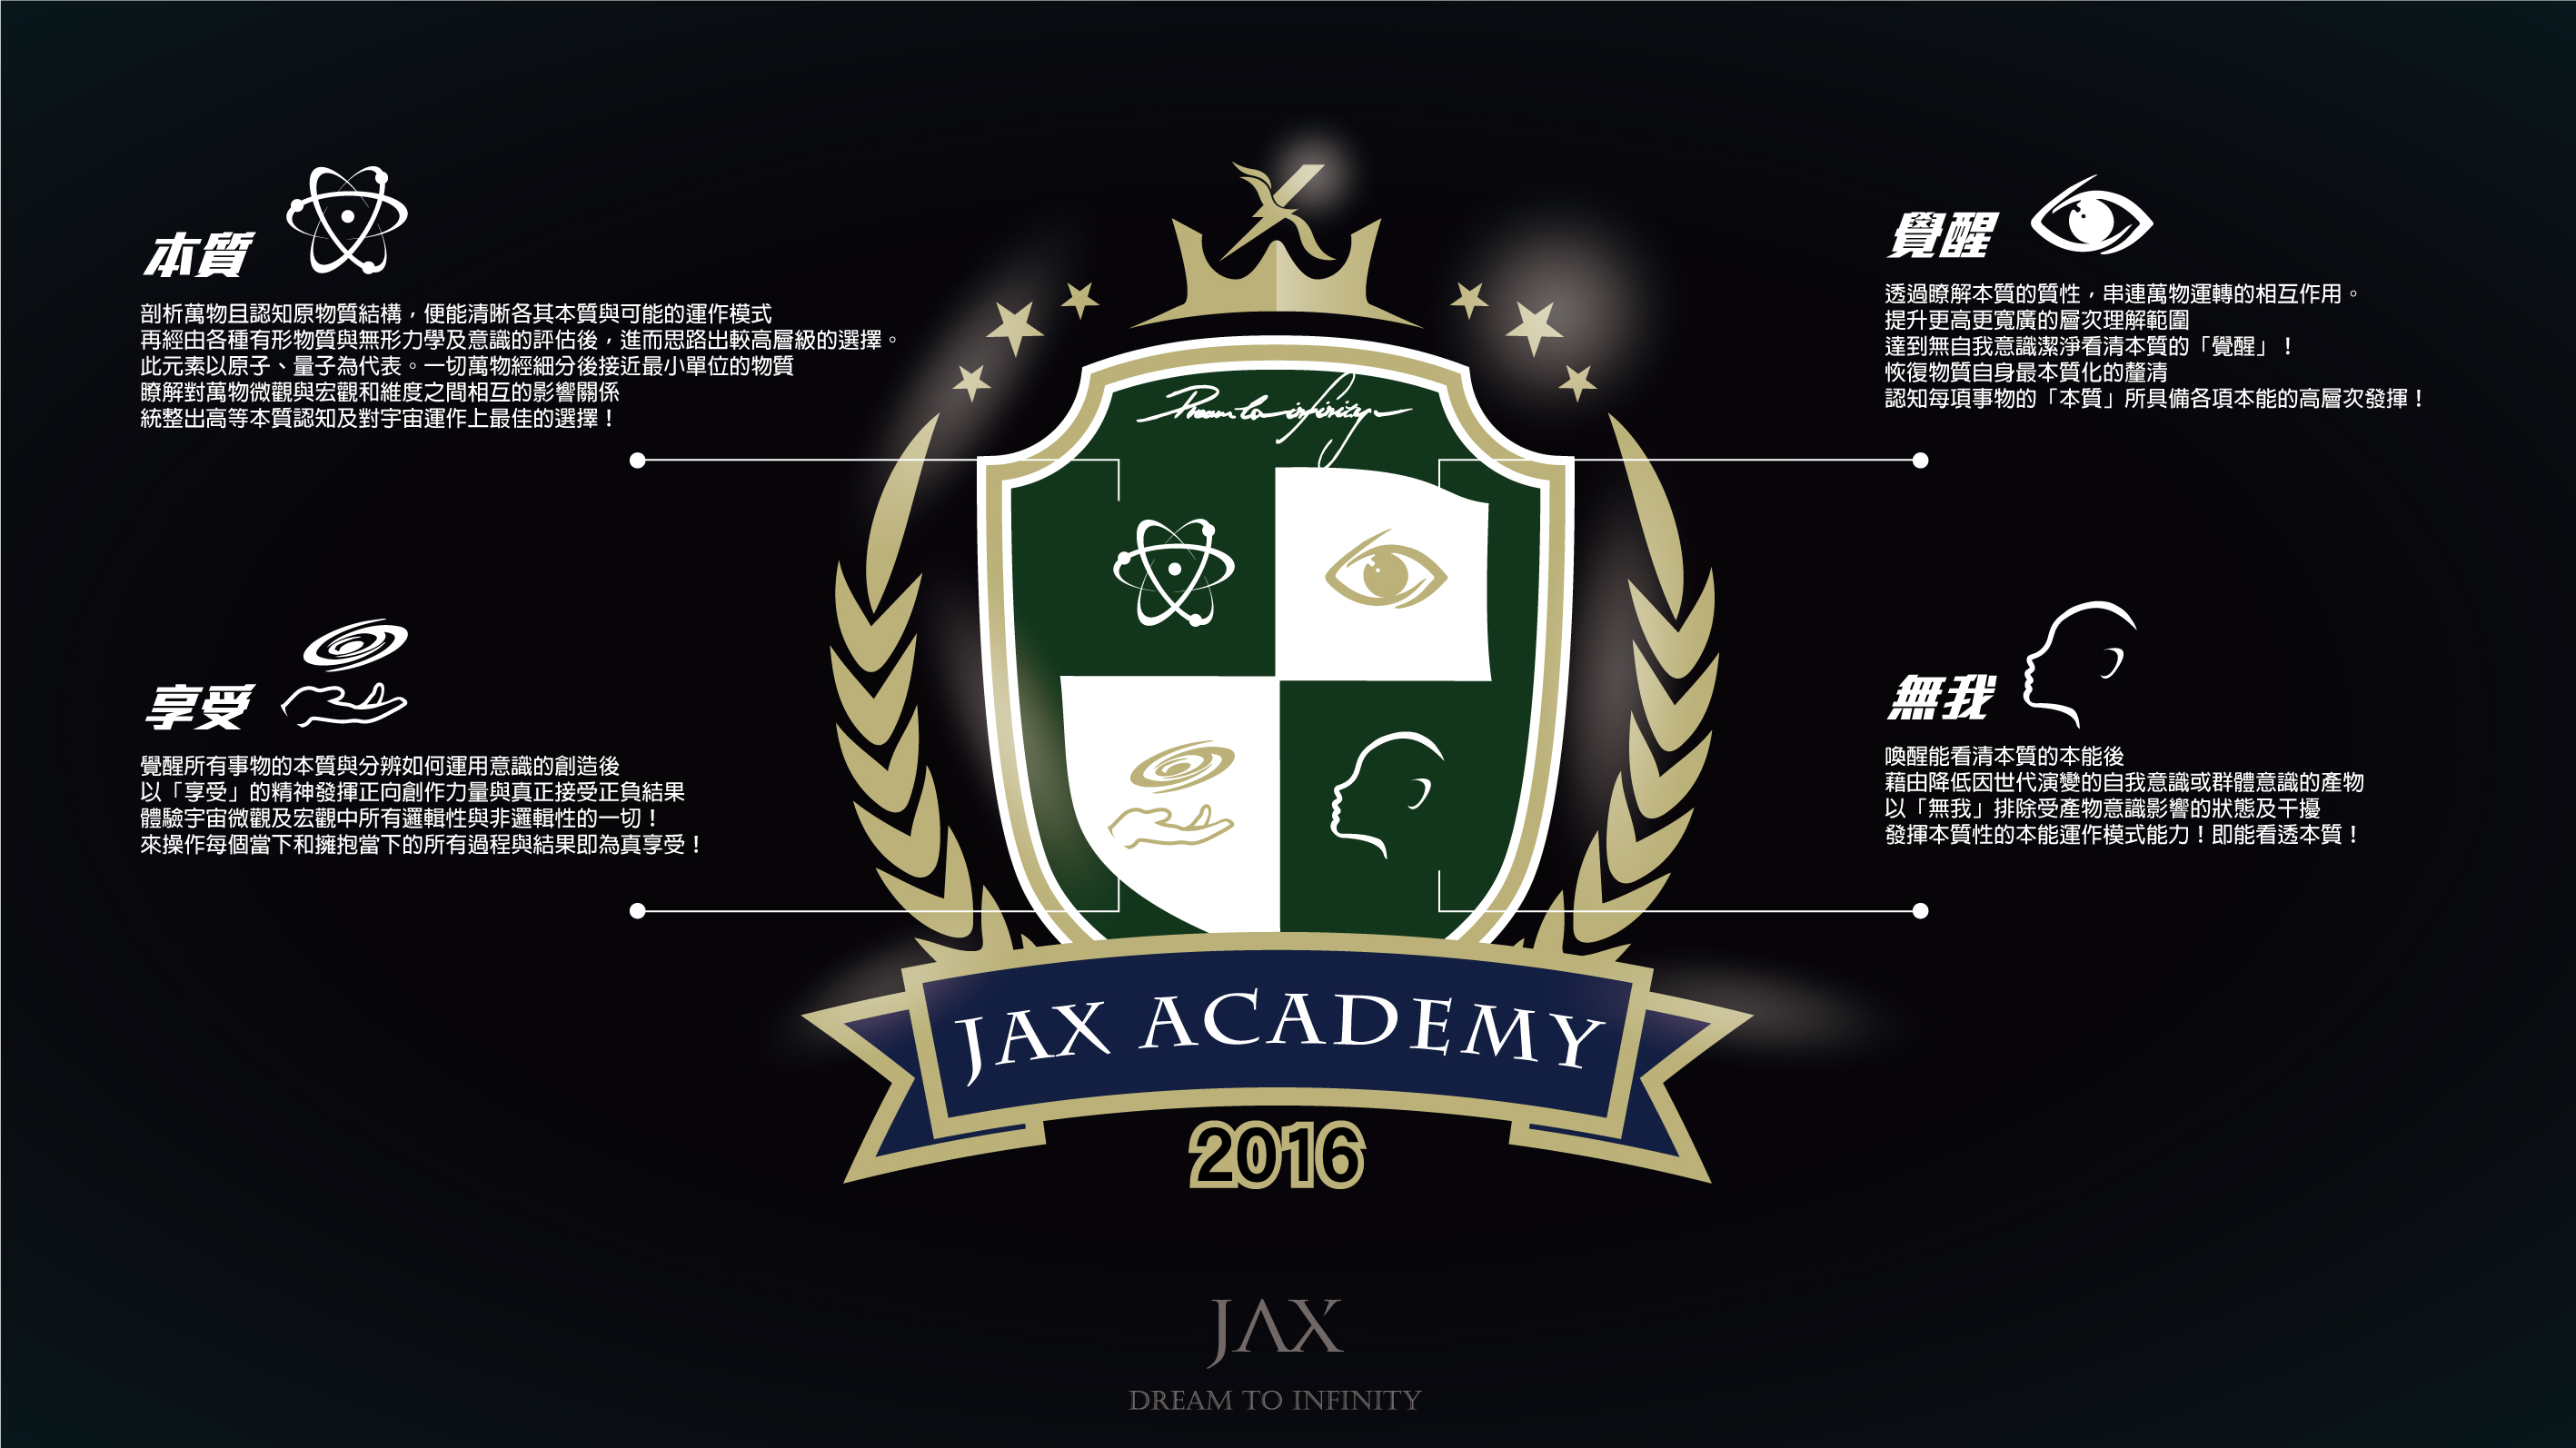 JAX-Academy-理念說明-改3.jpg